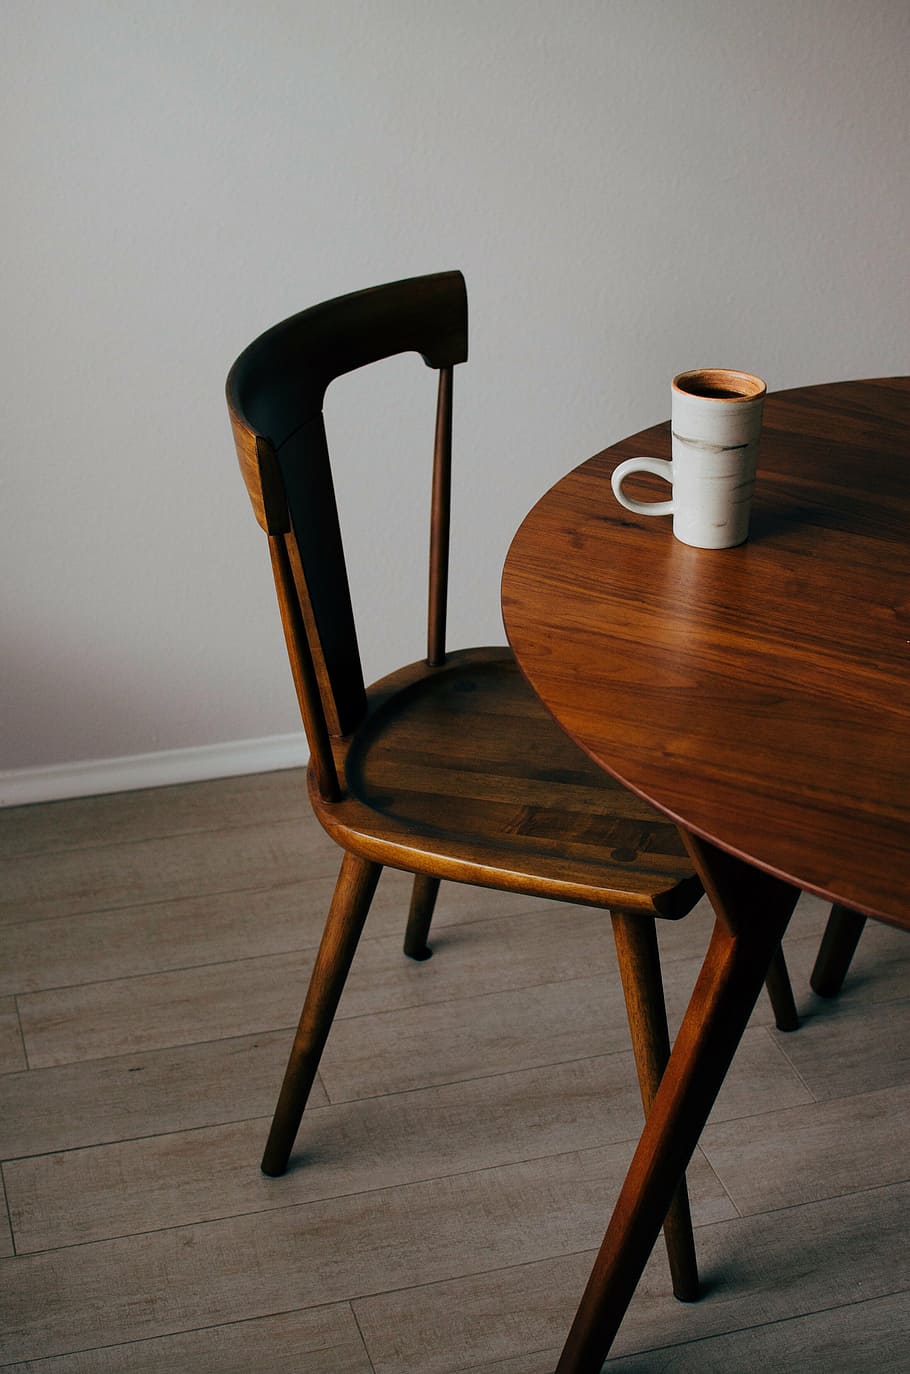 coklat, kayu, kursi, di samping, putih, keramik, cangkir kopi, meja, cangkir, kopi